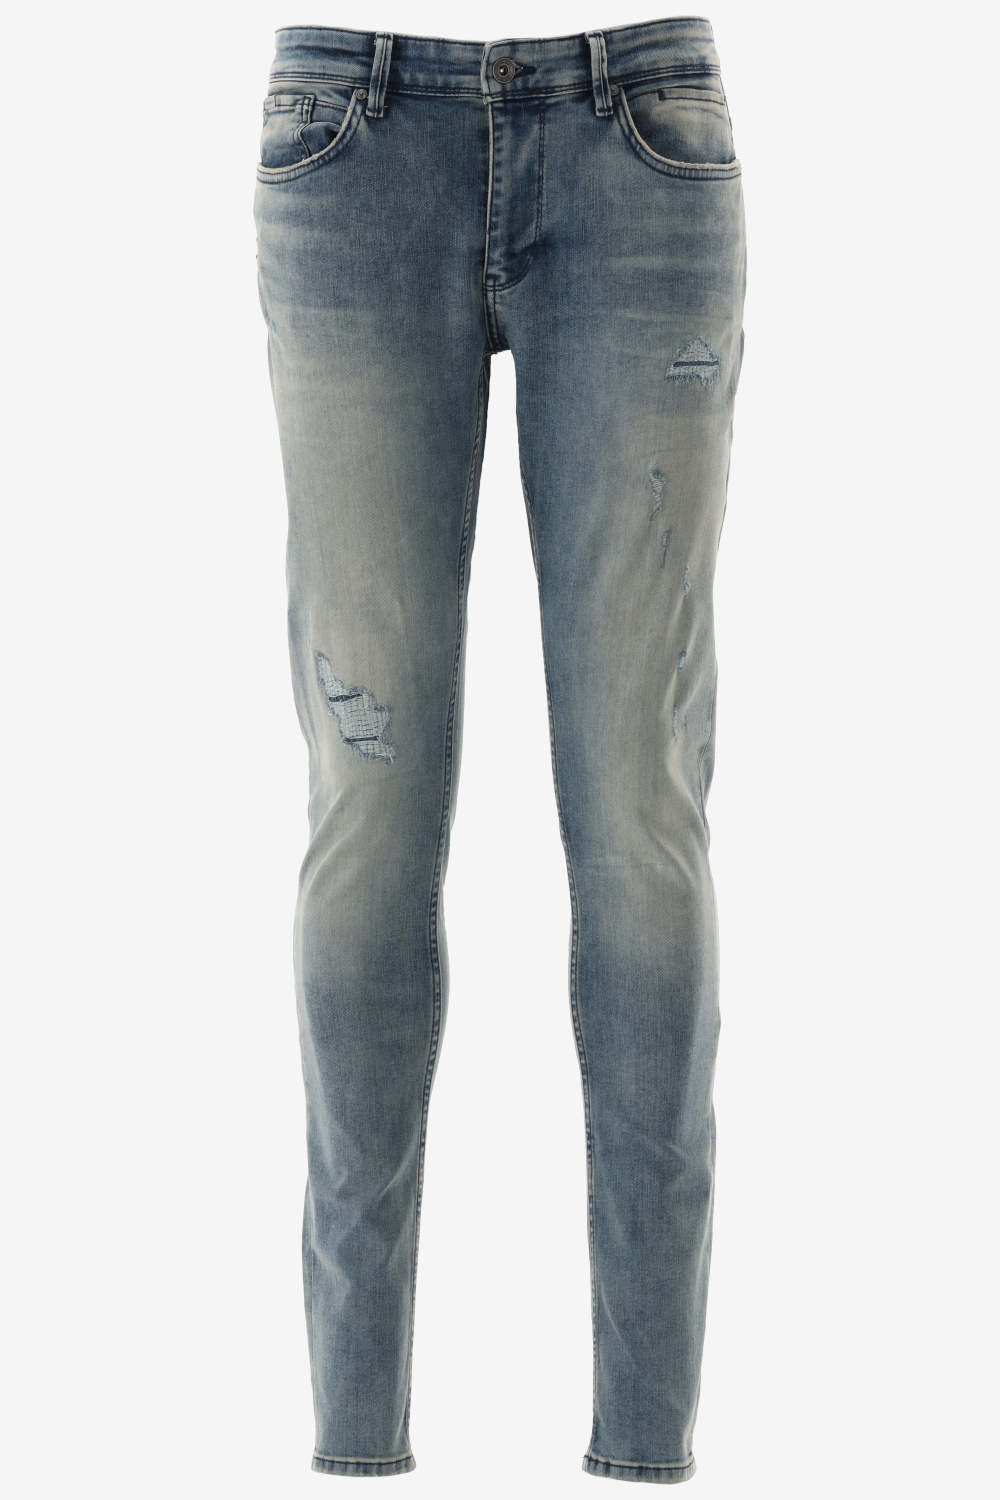 Purewhite - Jone Distressed Skinny Heren Skinny Fit Jeans - Blauw - Maat 33